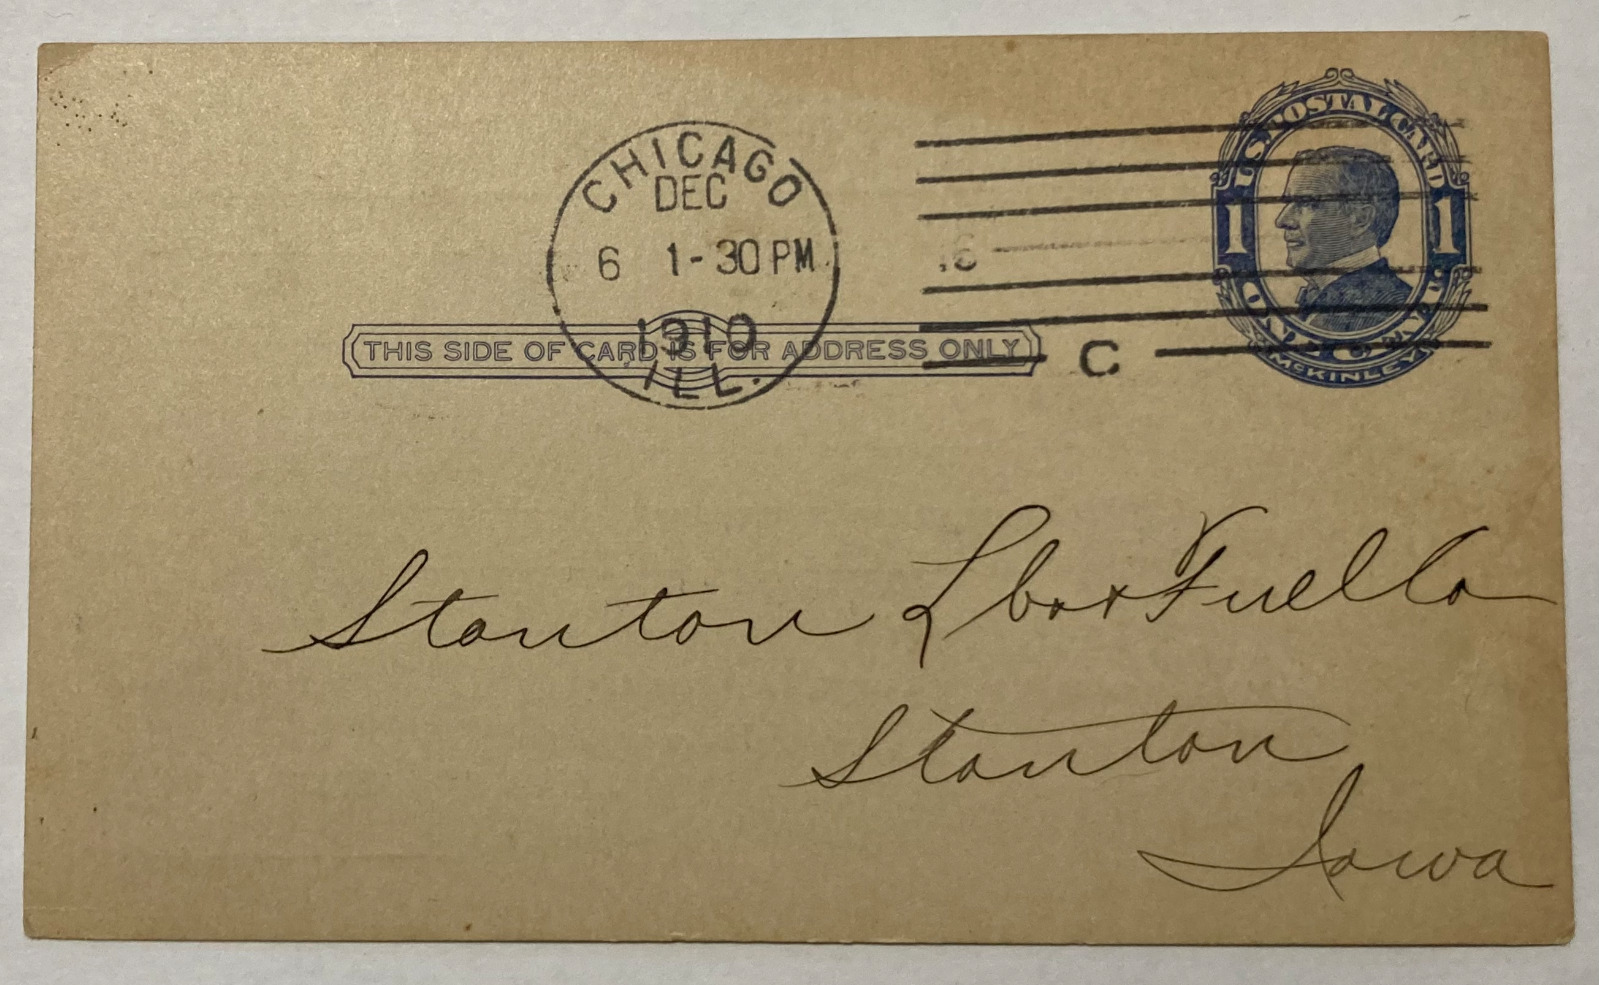 McKinley One Cent Postcard 1910 postage stamped